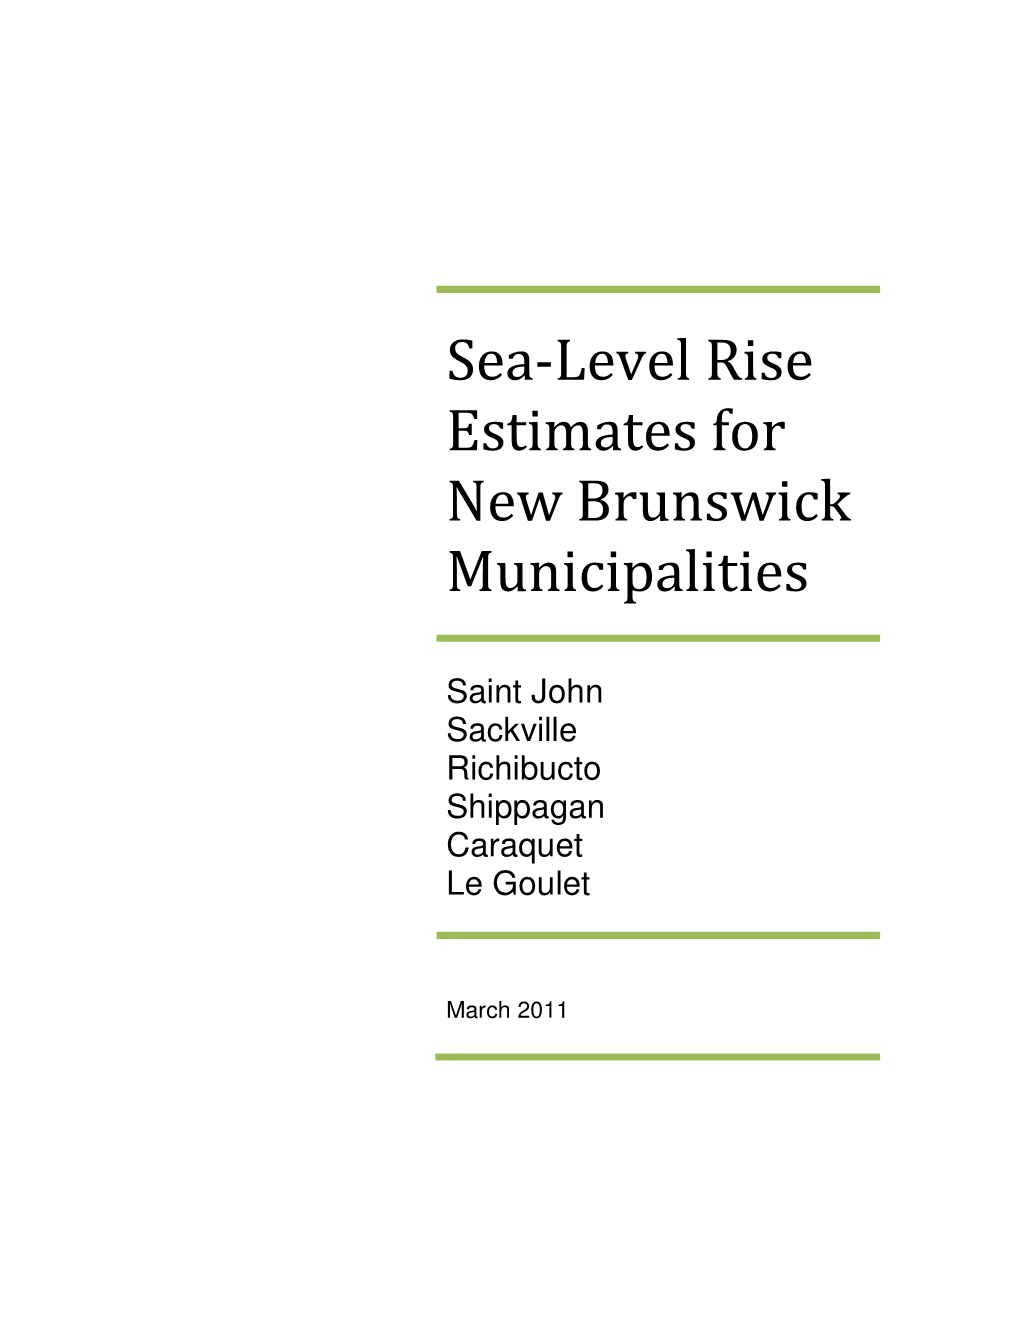 Sea-Level Rise Estimates for New Brunswick Municipalities